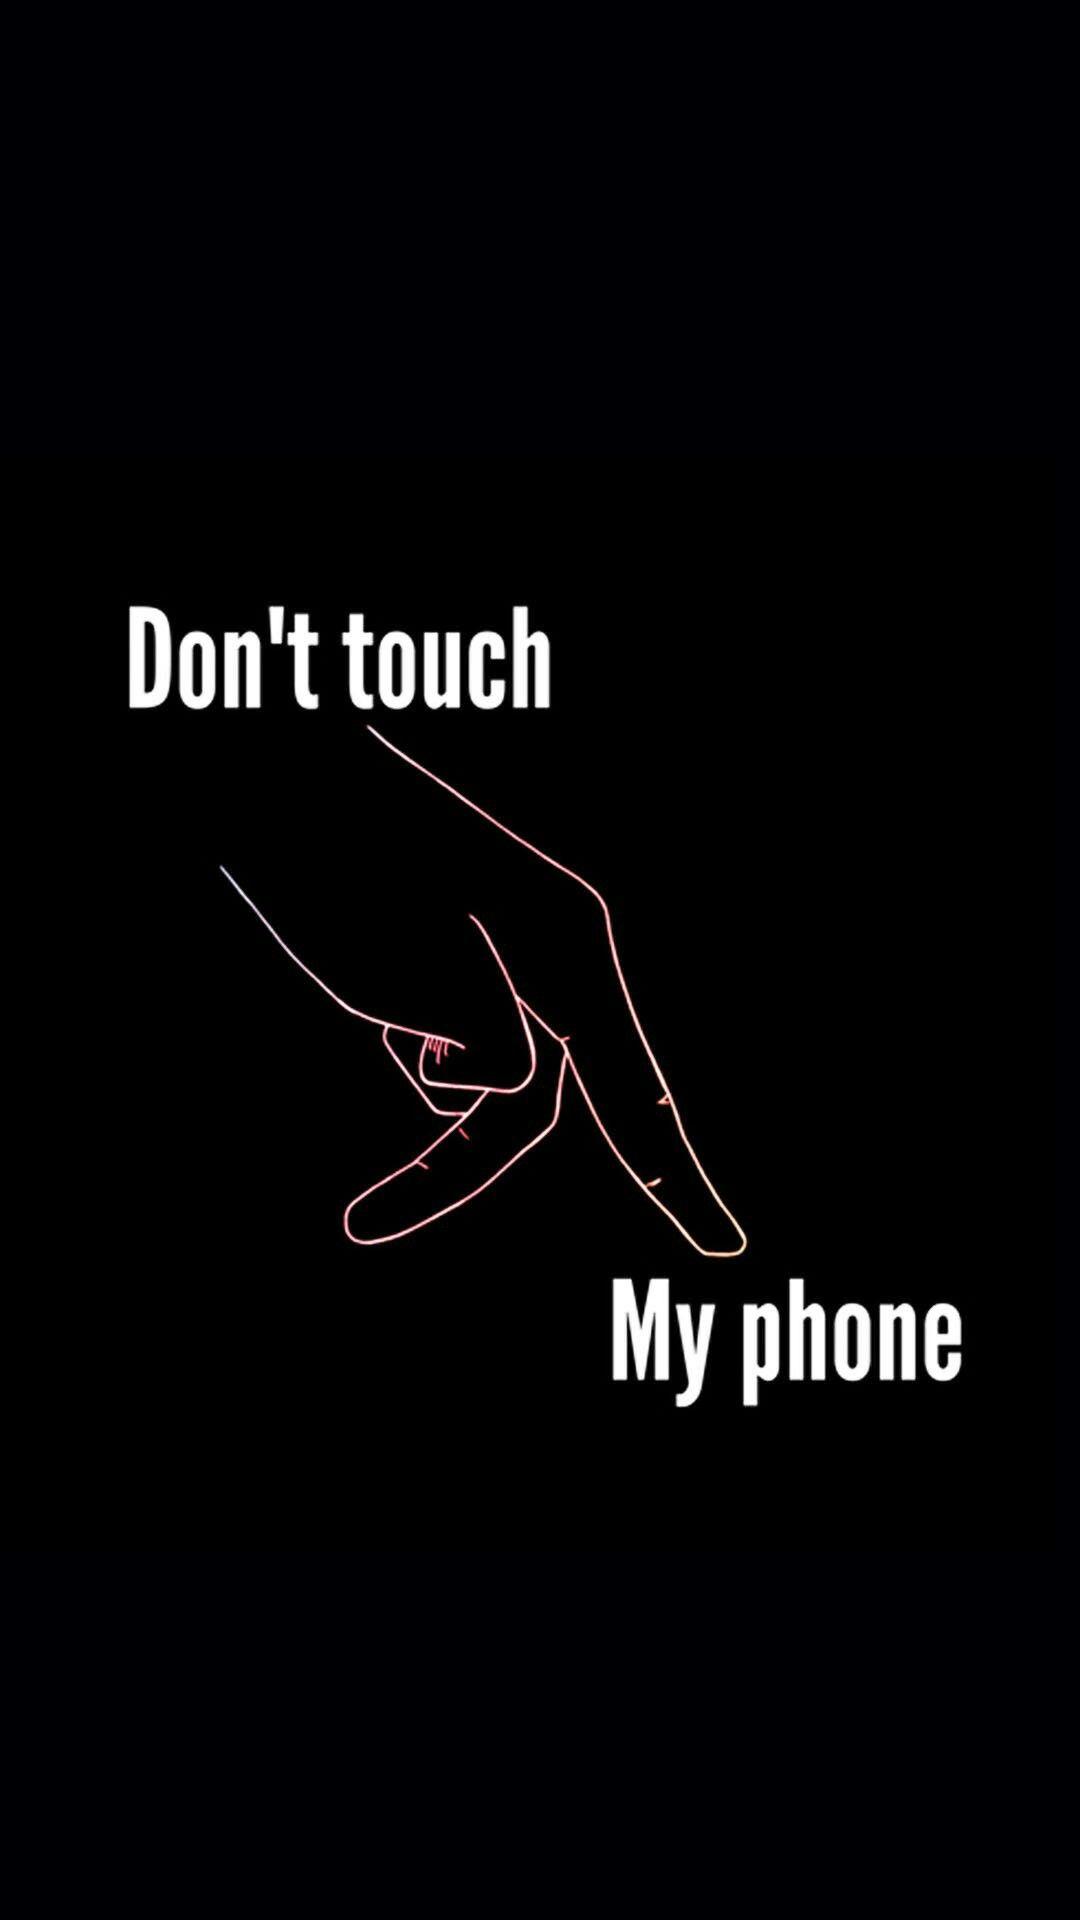 Don't touch my phone wallpaper. Latar belakang, Wallpaper ponsel